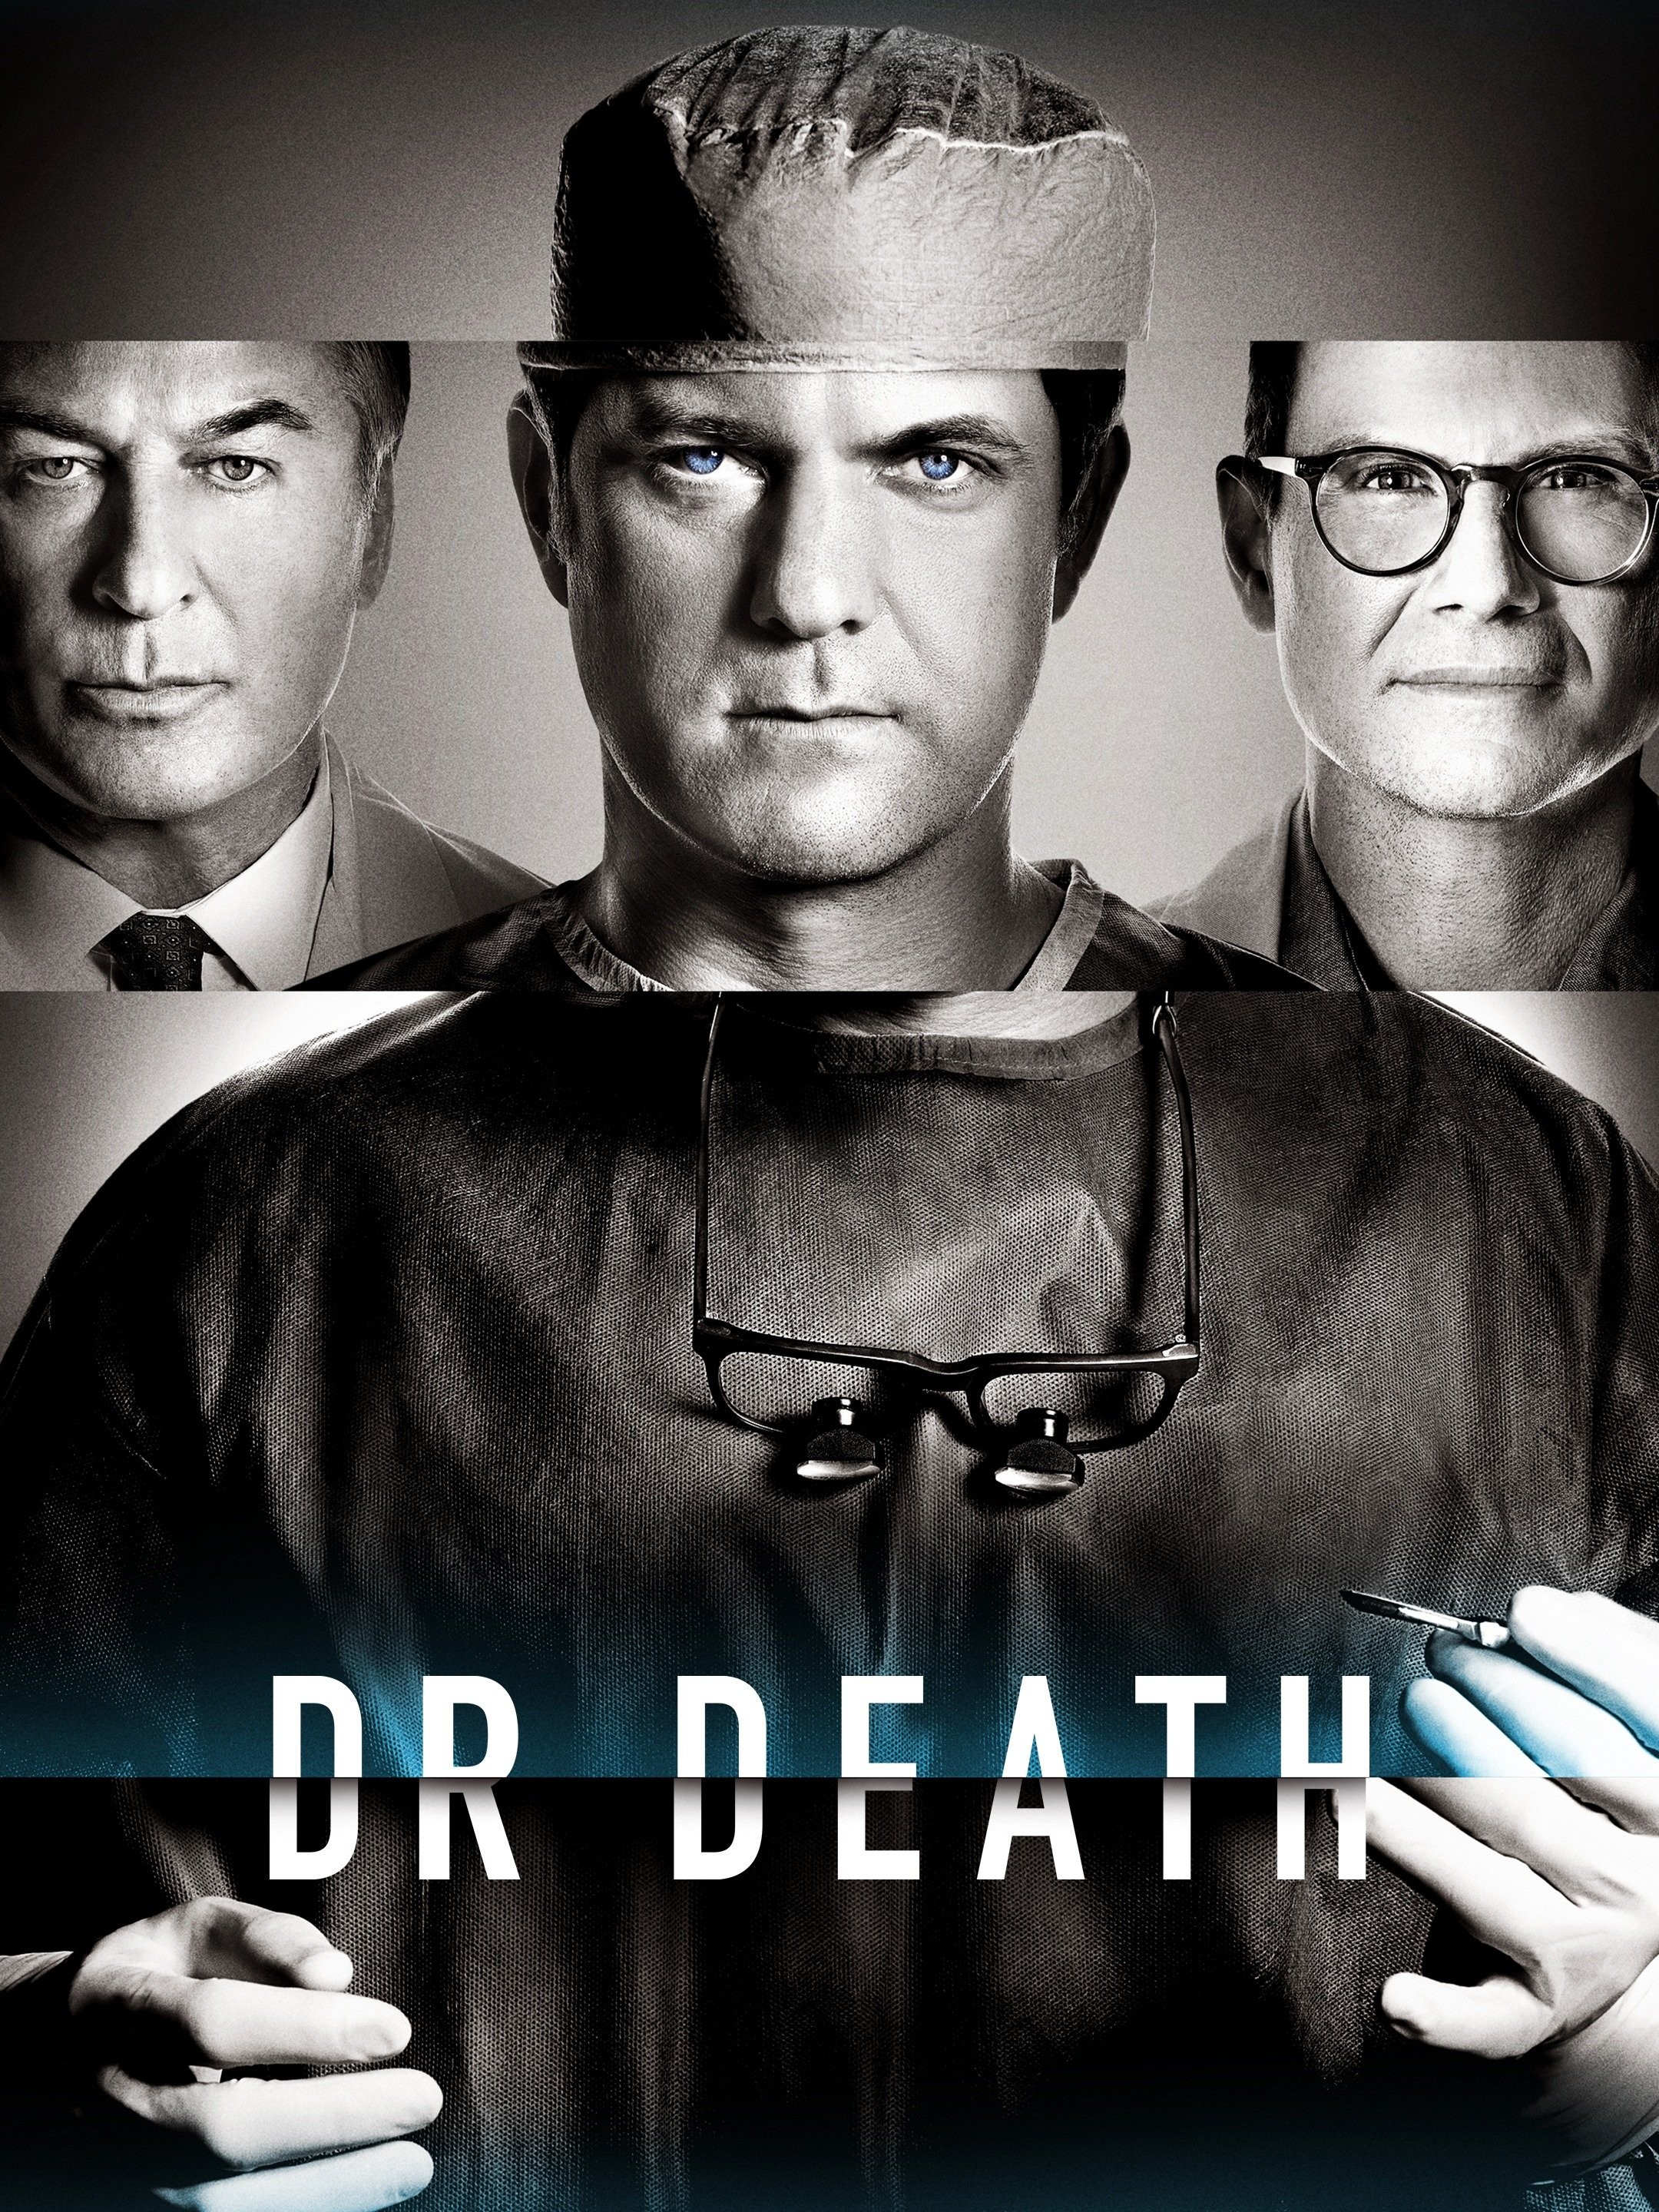 Dead Mount Death Play (TV Series 2023– ) - IMDb